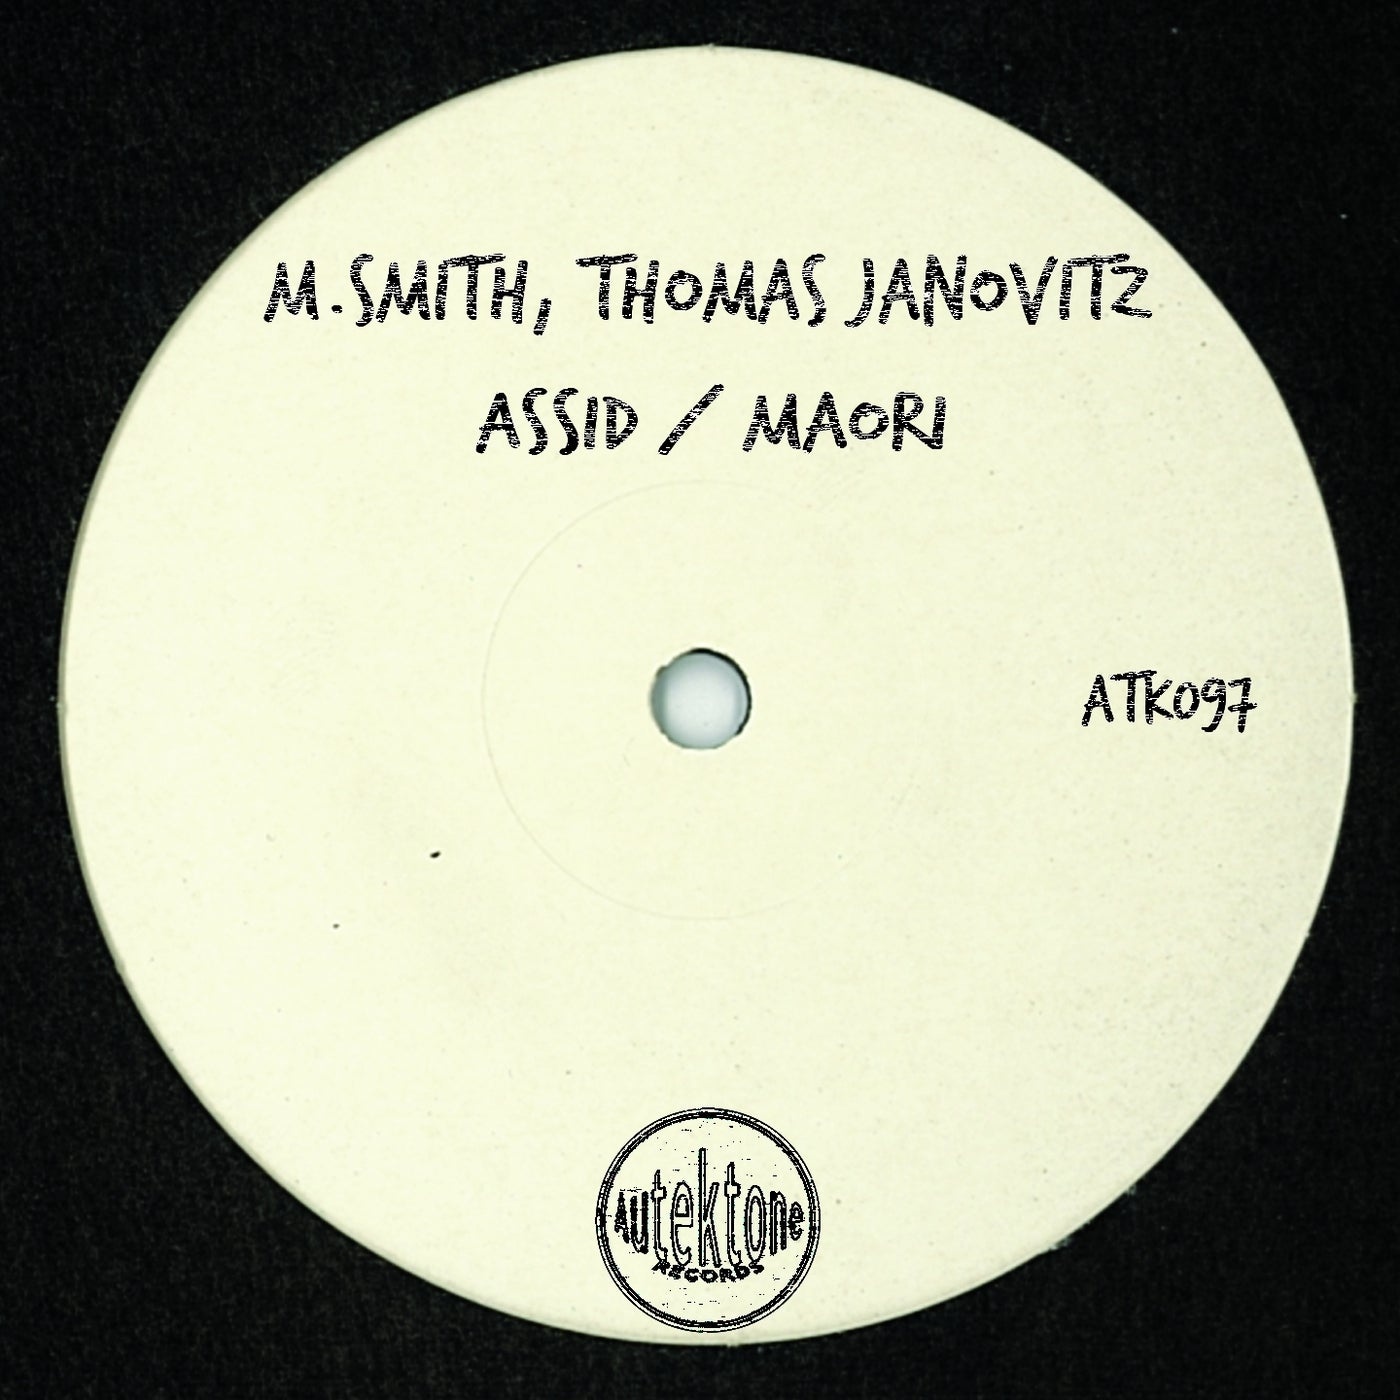 M.Smith, Thomas Janovitz - Assid - Maori [ATK097]